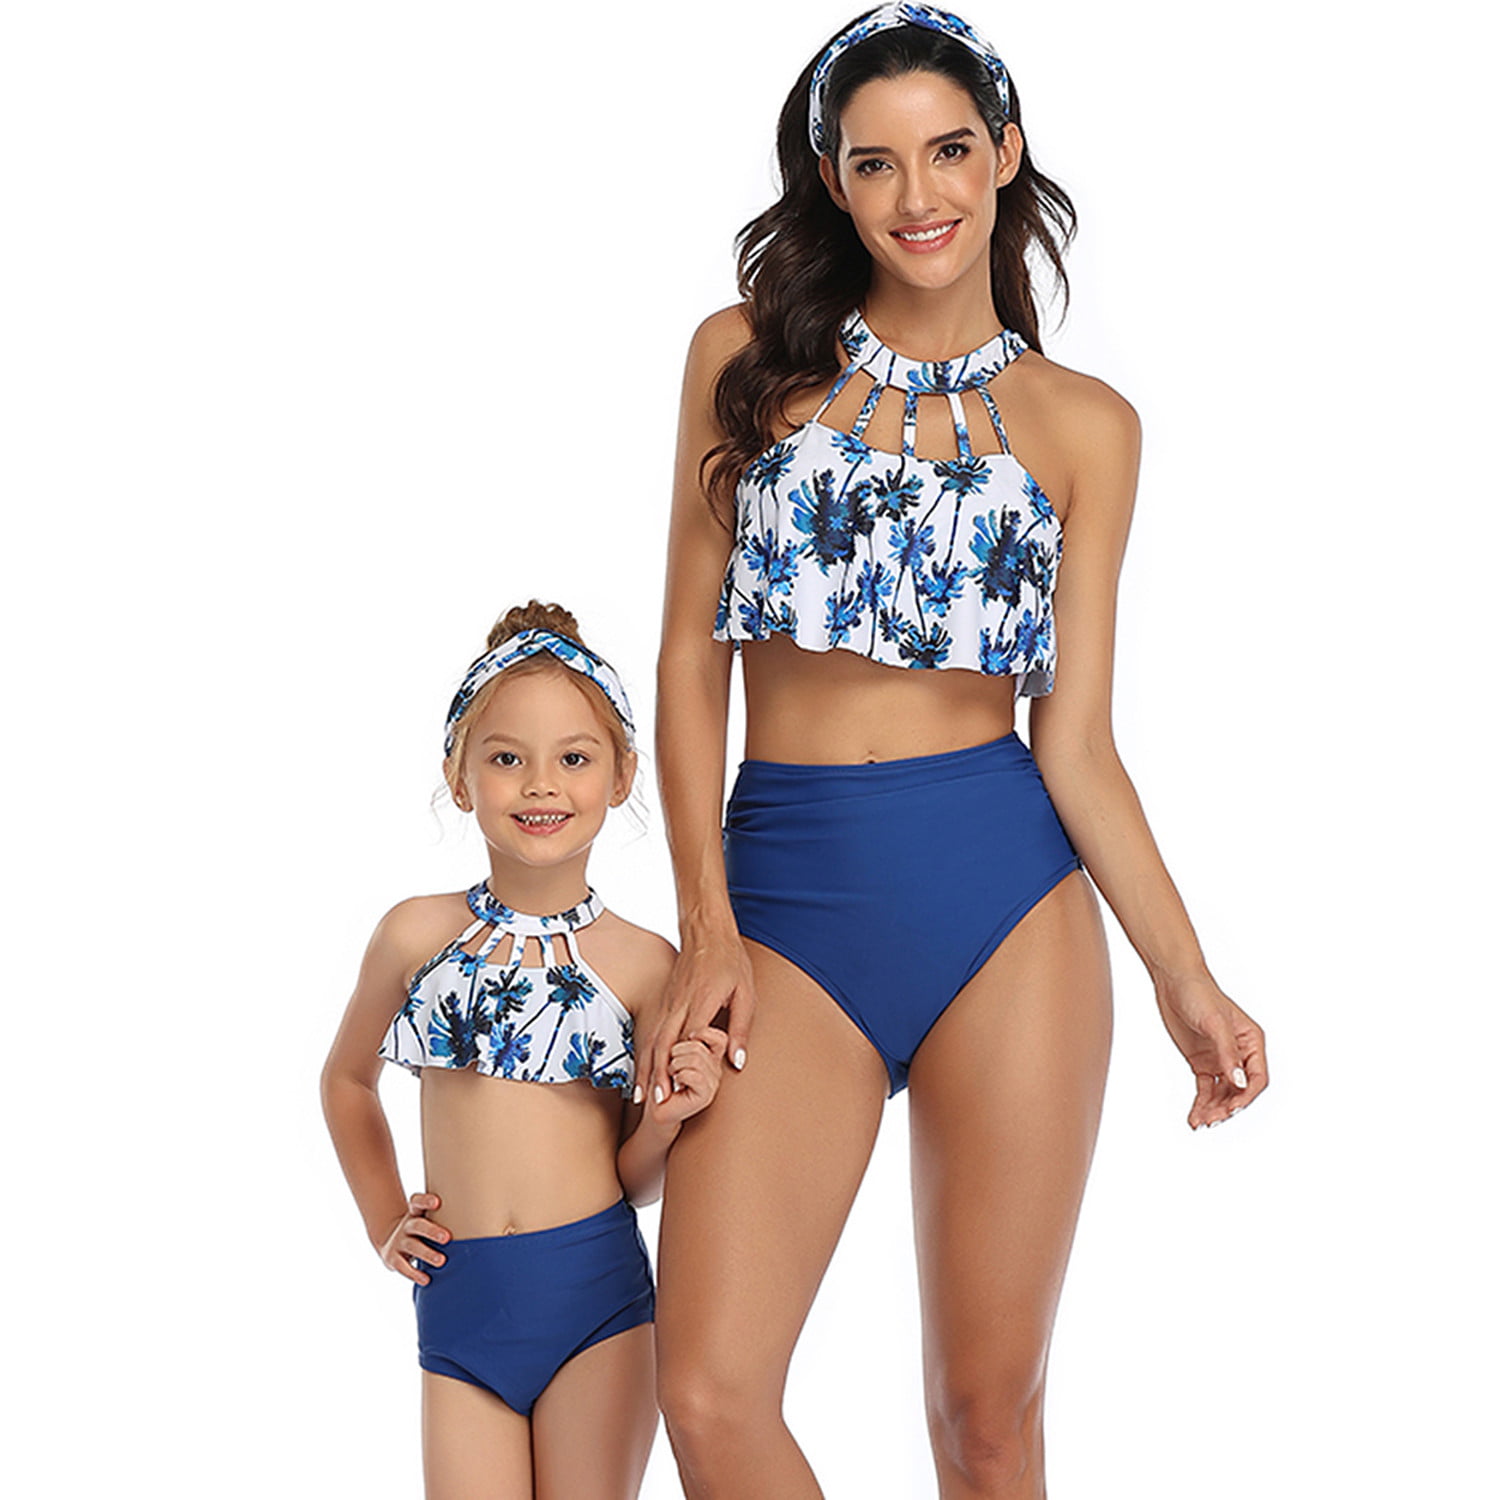 BLUE SAILOR SWIM TOP swimsuit bikini bathing suit  EXTRA SMALL MEDIUM LARGE  XL